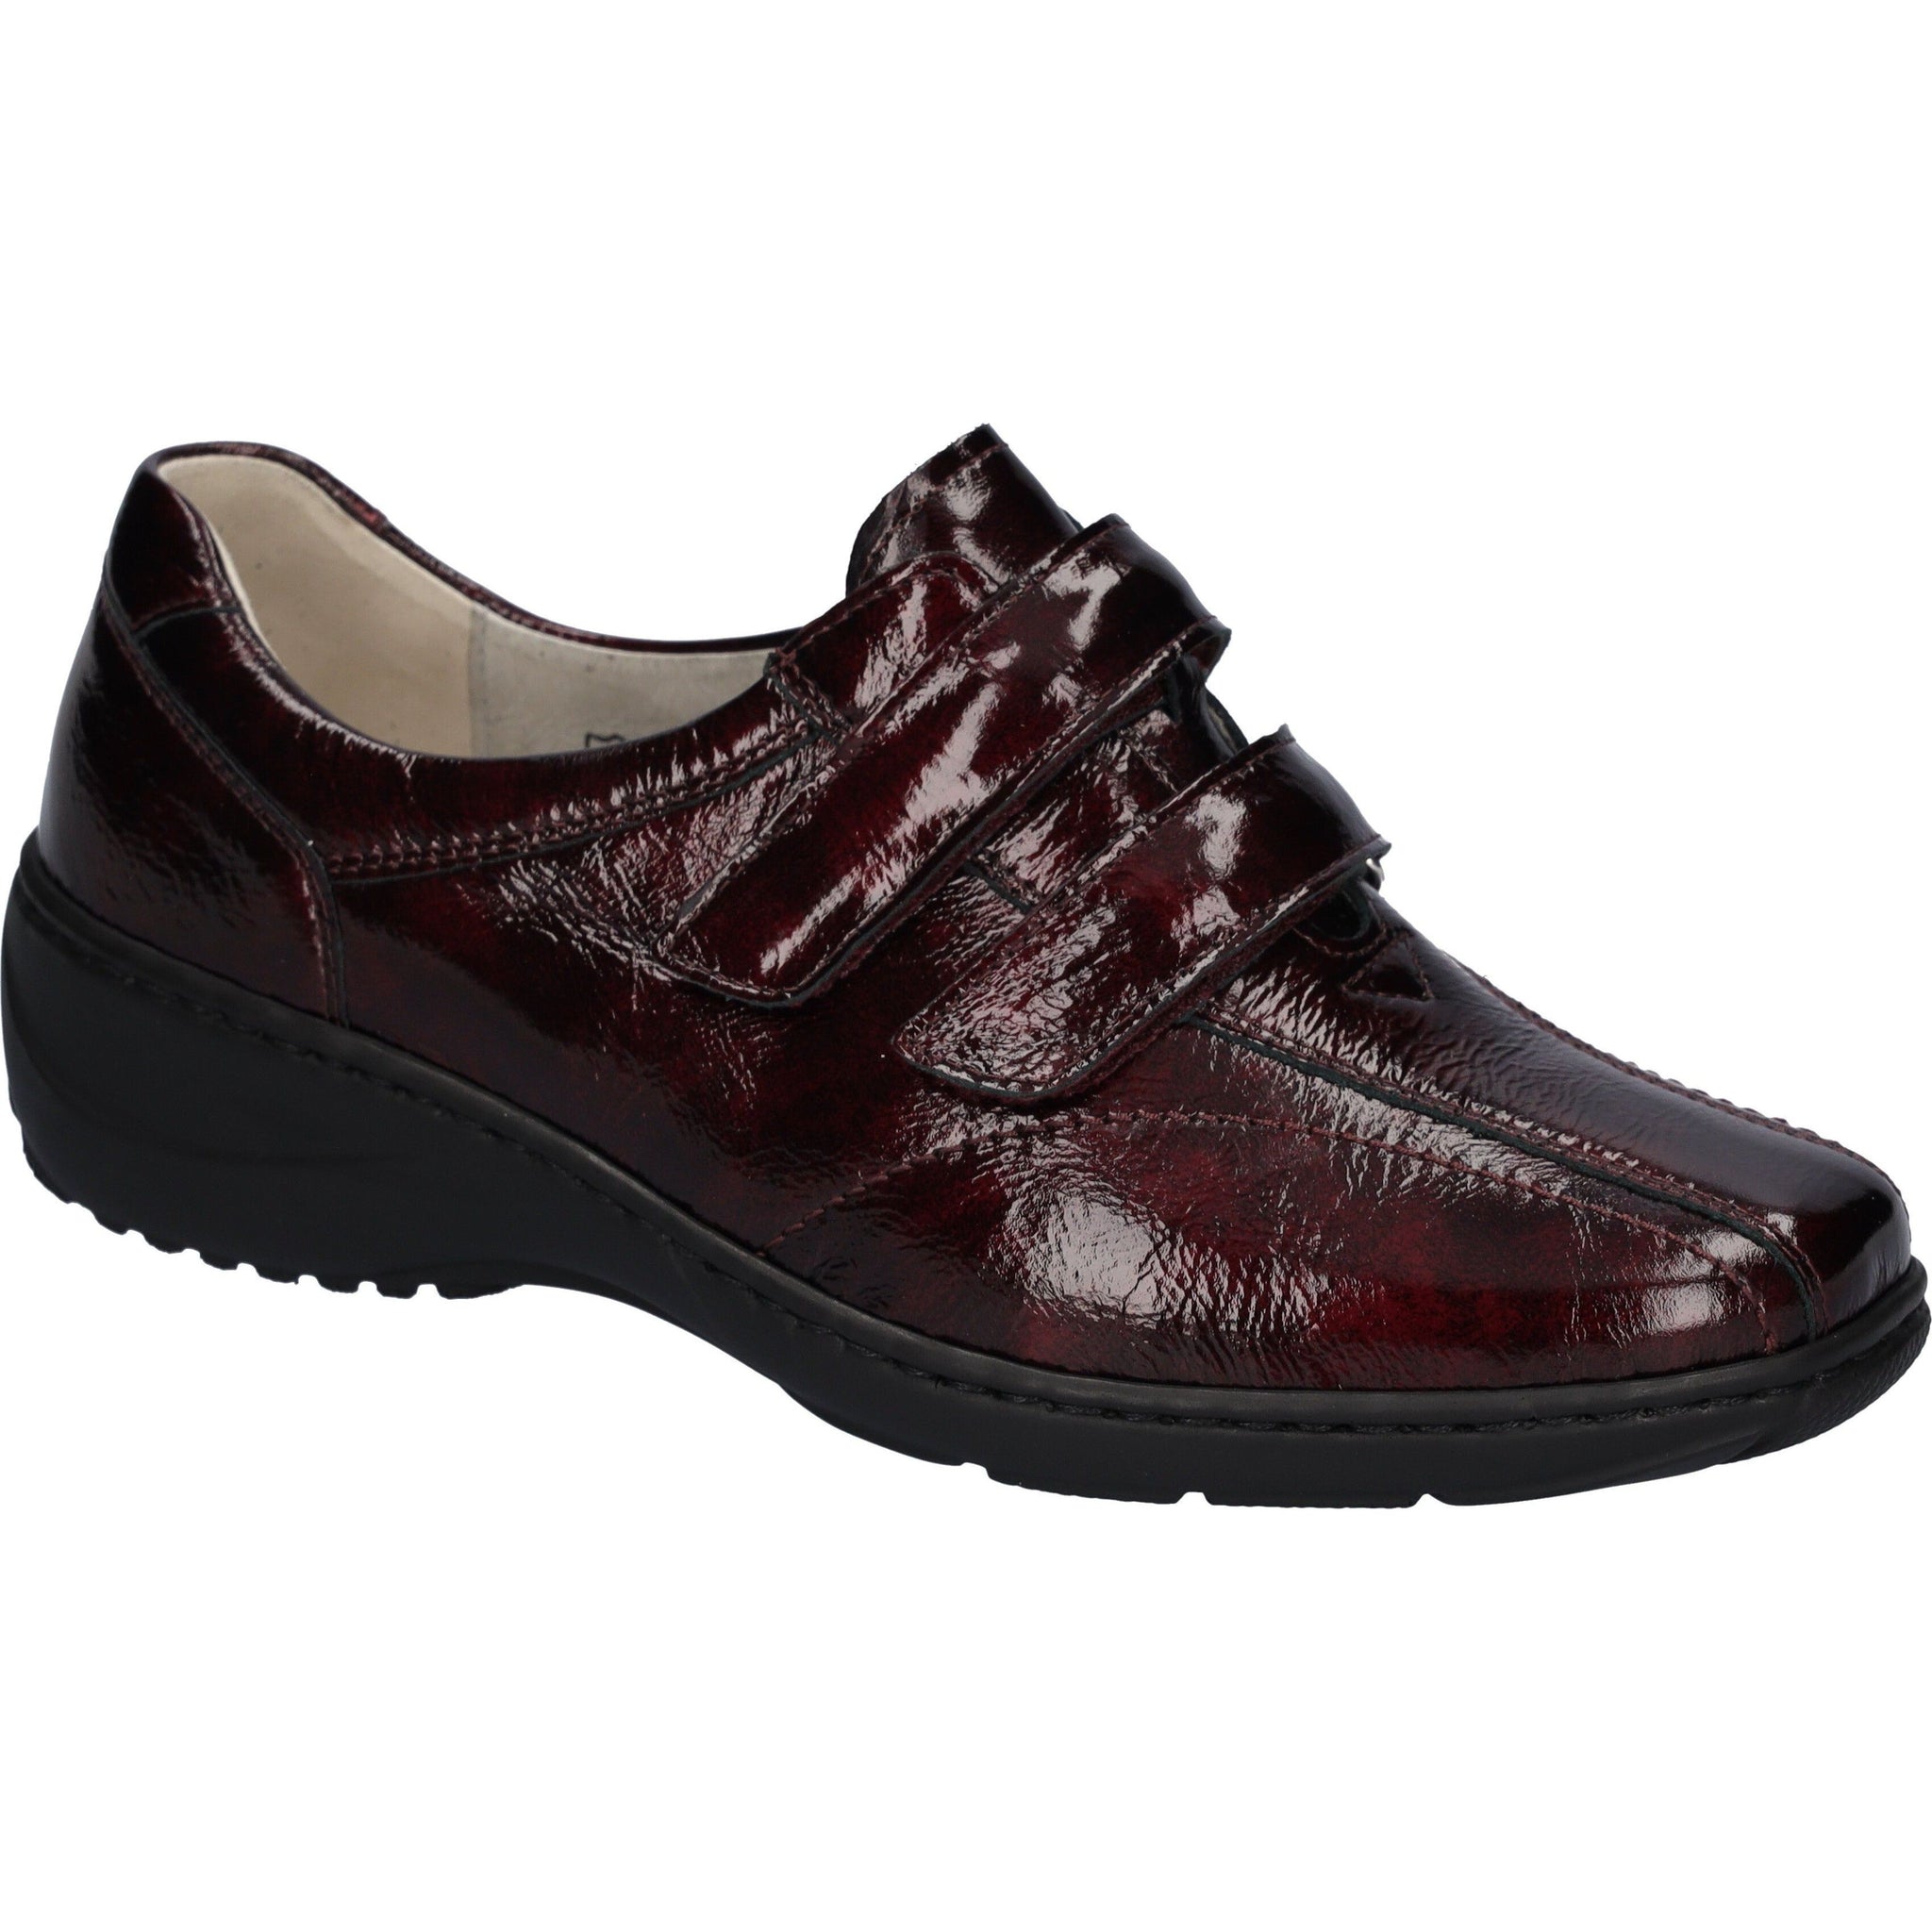 Waldlaufer Kya(607302) - Ladies Wide Fit Velcro Shoe in Burgandy Patent |Waldläufer |Wide Fit Shoes | Wisemans | Bantry |Shoe Shop| West Cork | Ireland